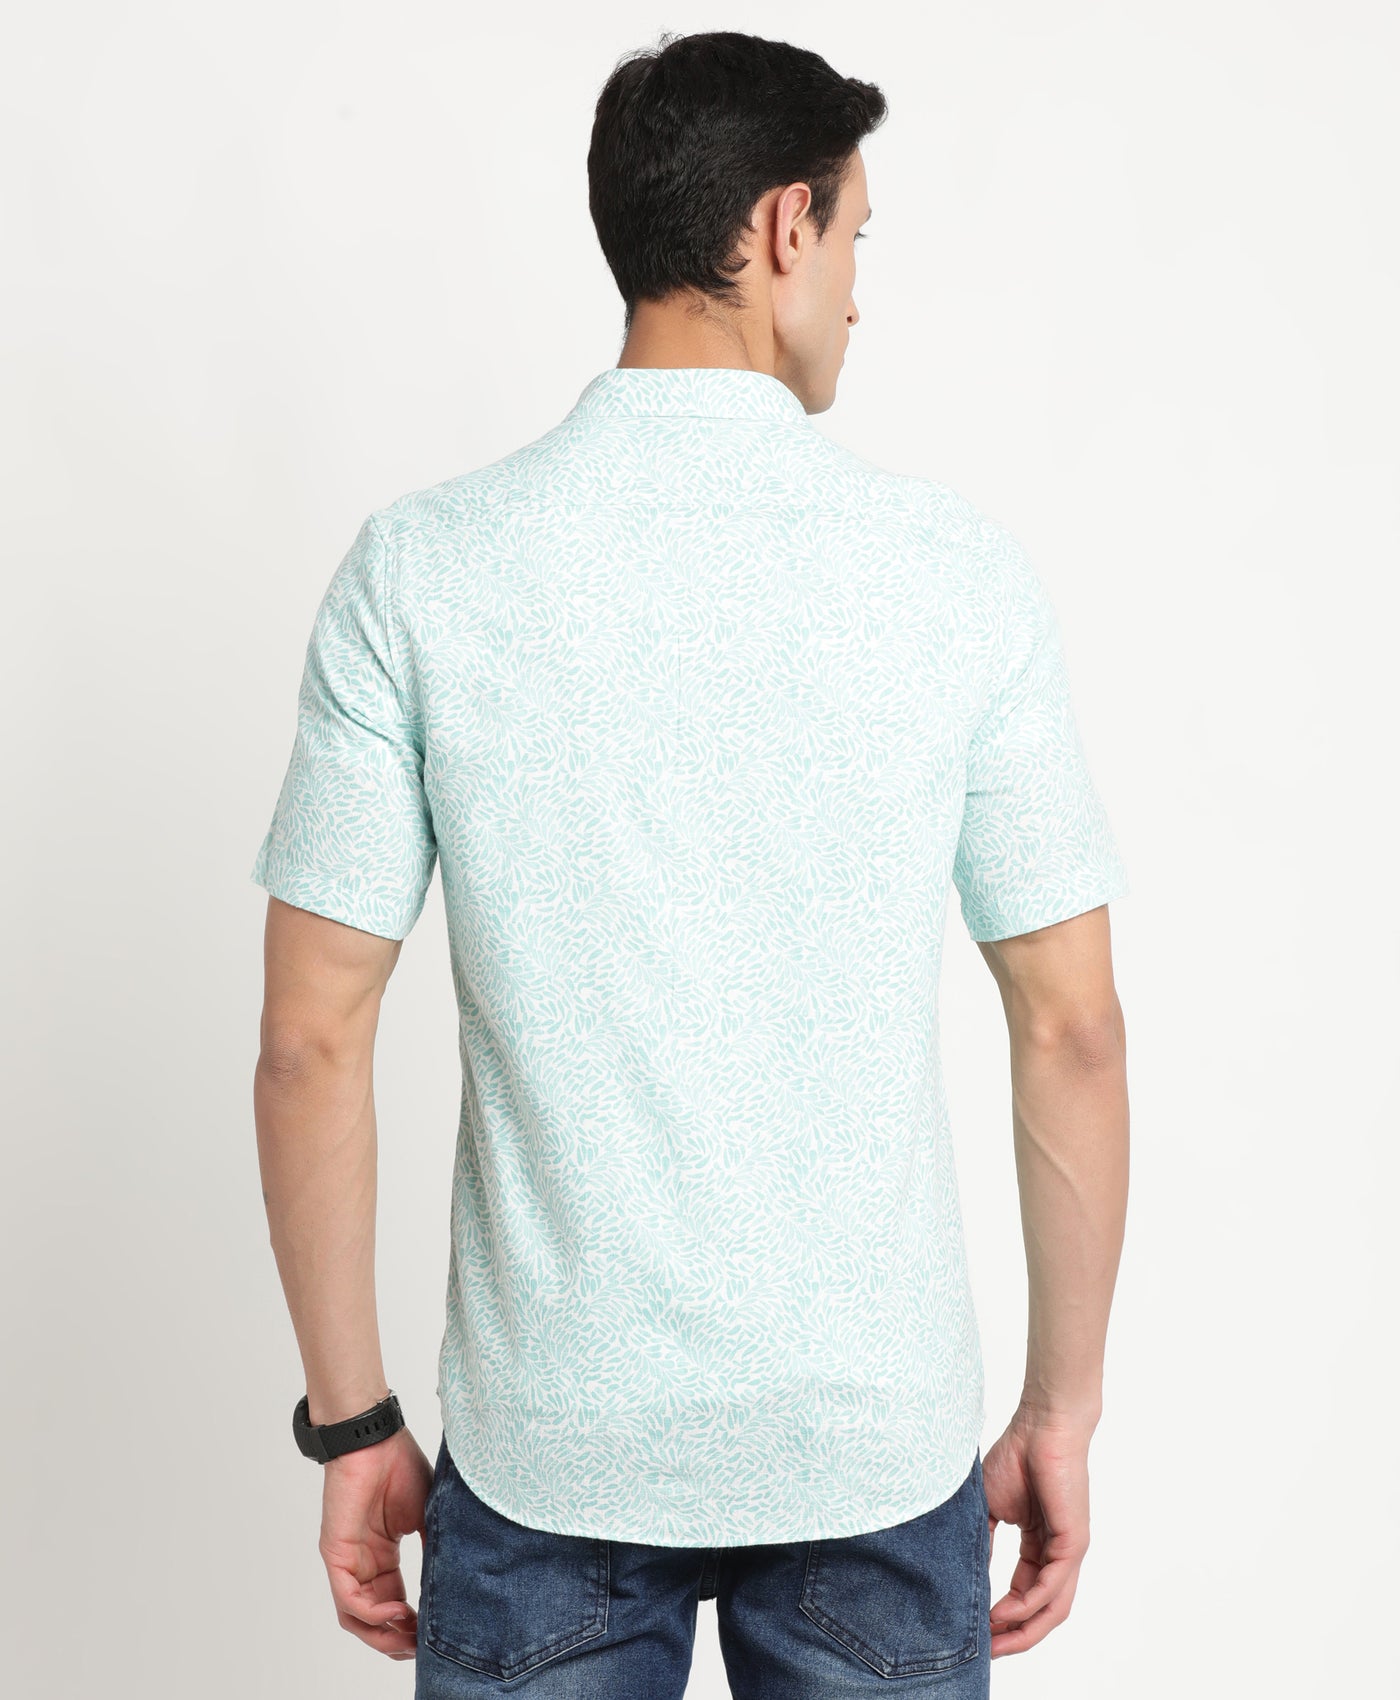 Excel Linen Sky Blue Printed Slim Fit Half Sleeve Casual Shirt